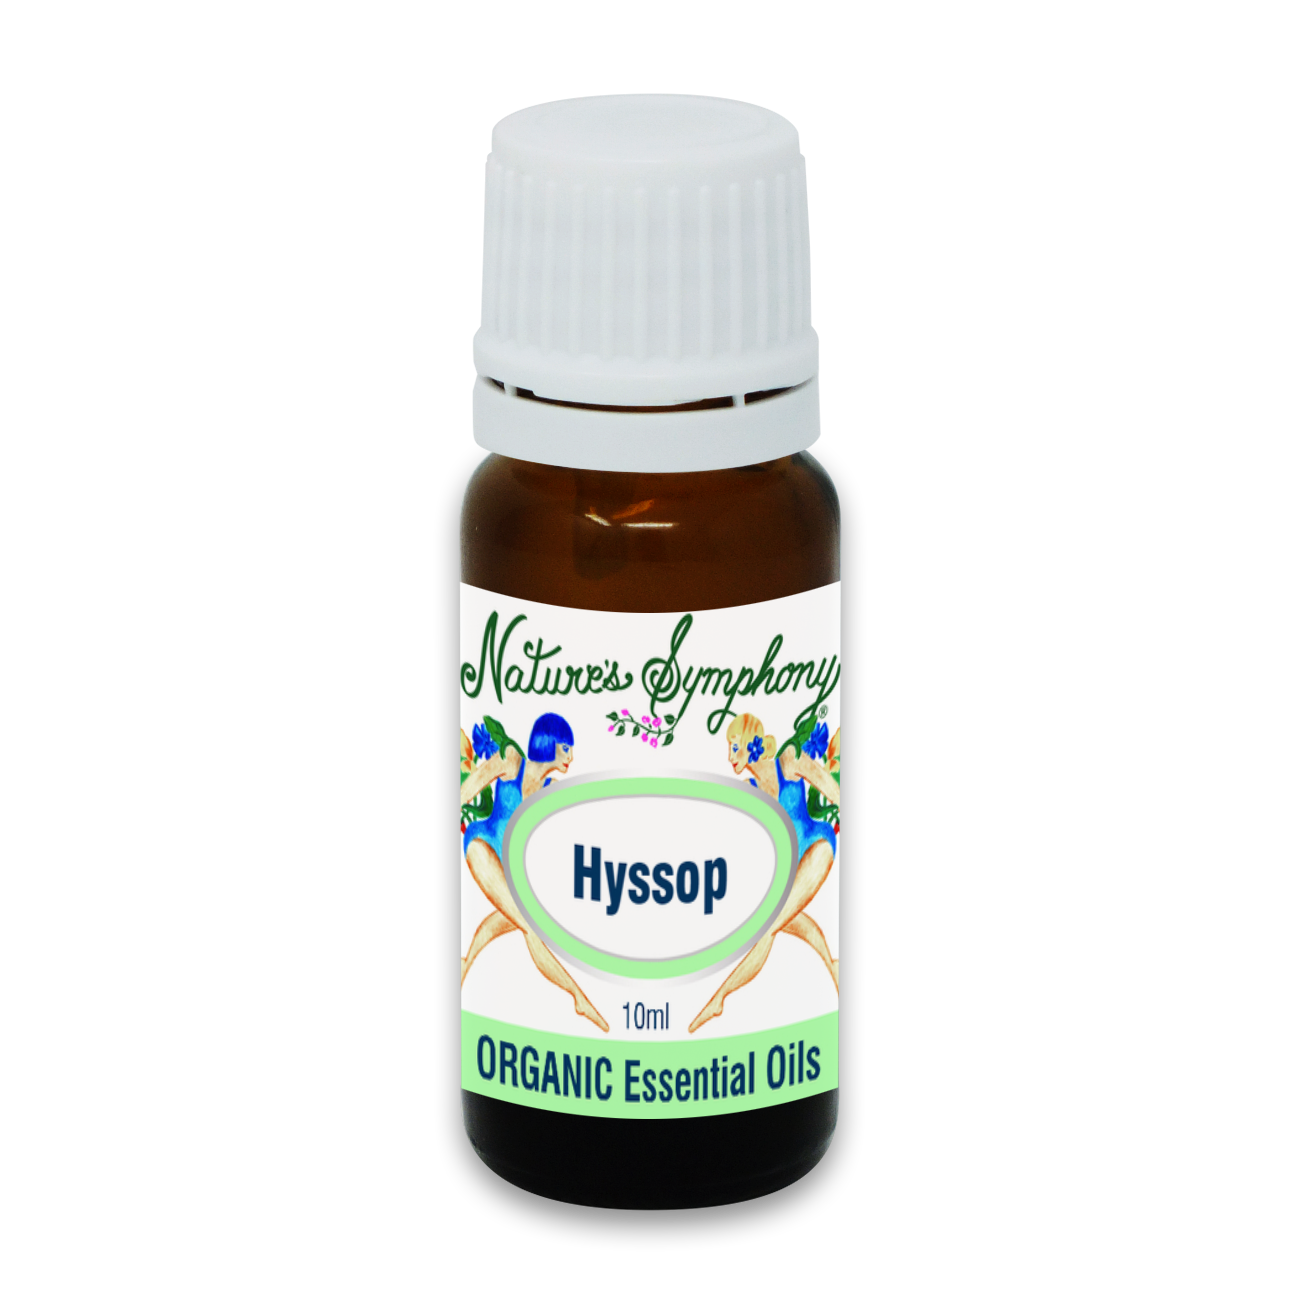 Hyssop, Organic/Wildcrafted oil - 10ml